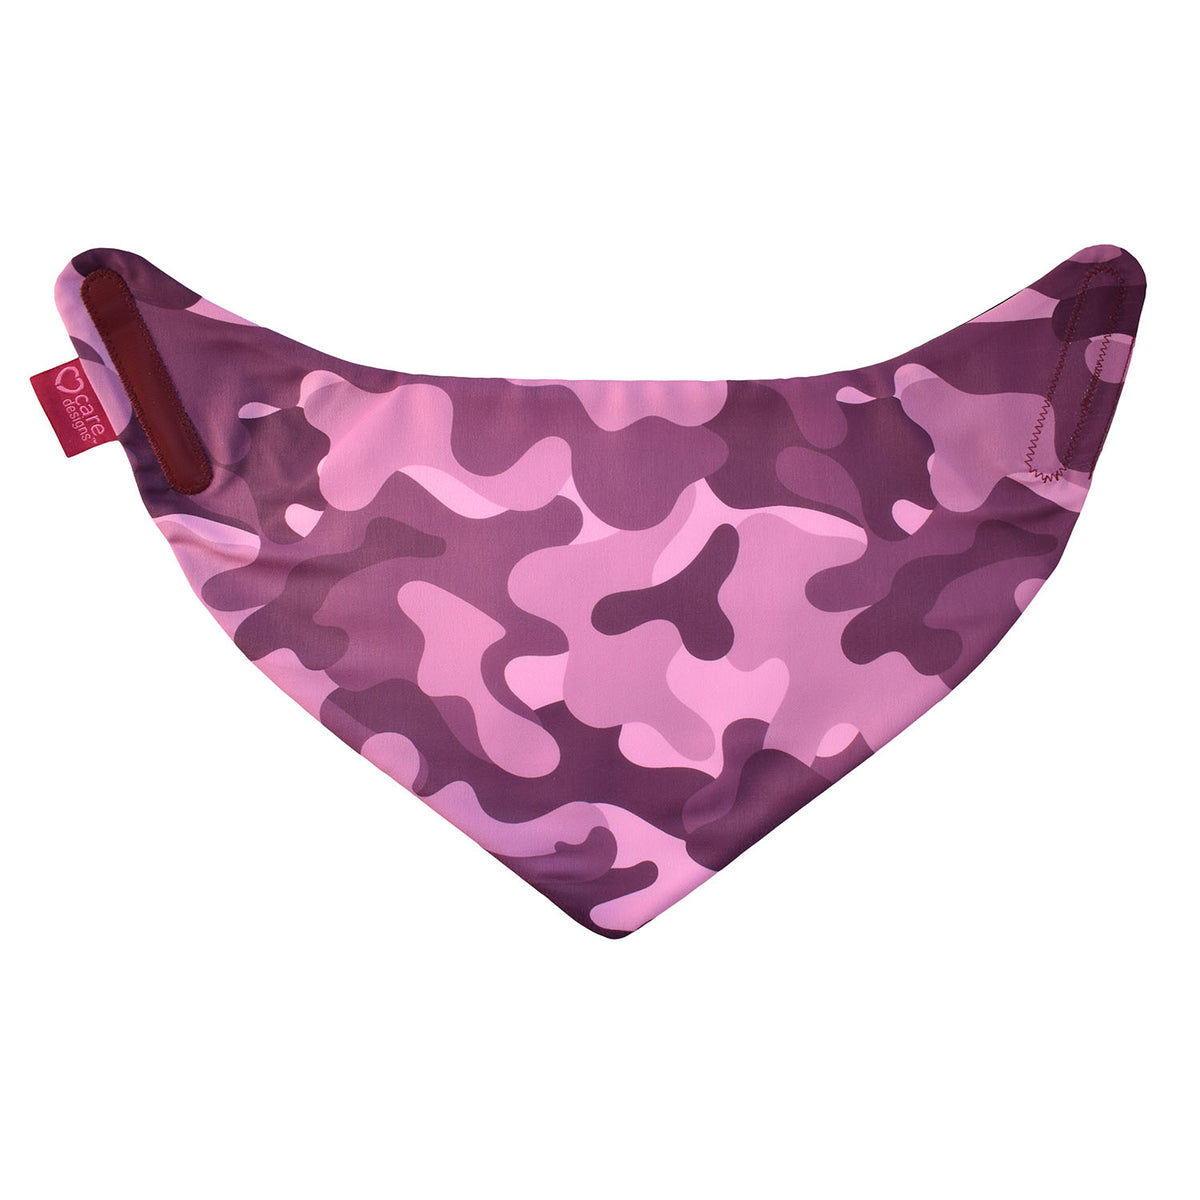 Junior Neckerchief style dribble bib - Pink Camouflage